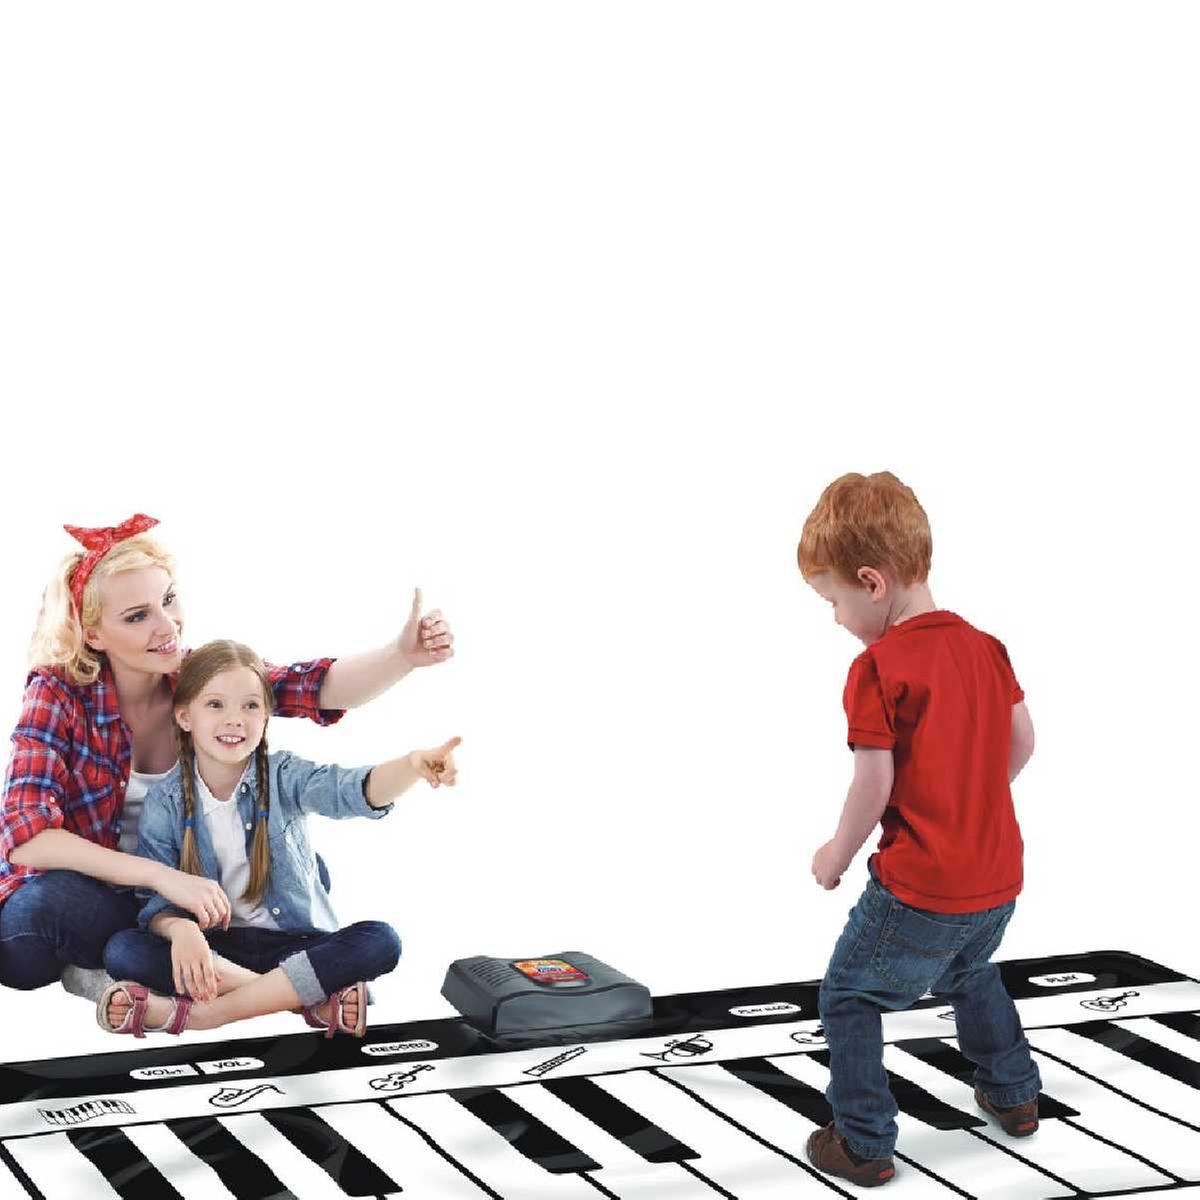 Piano de suelo | Microfonos Y Tapetes De Baile | Toys"R"Us España